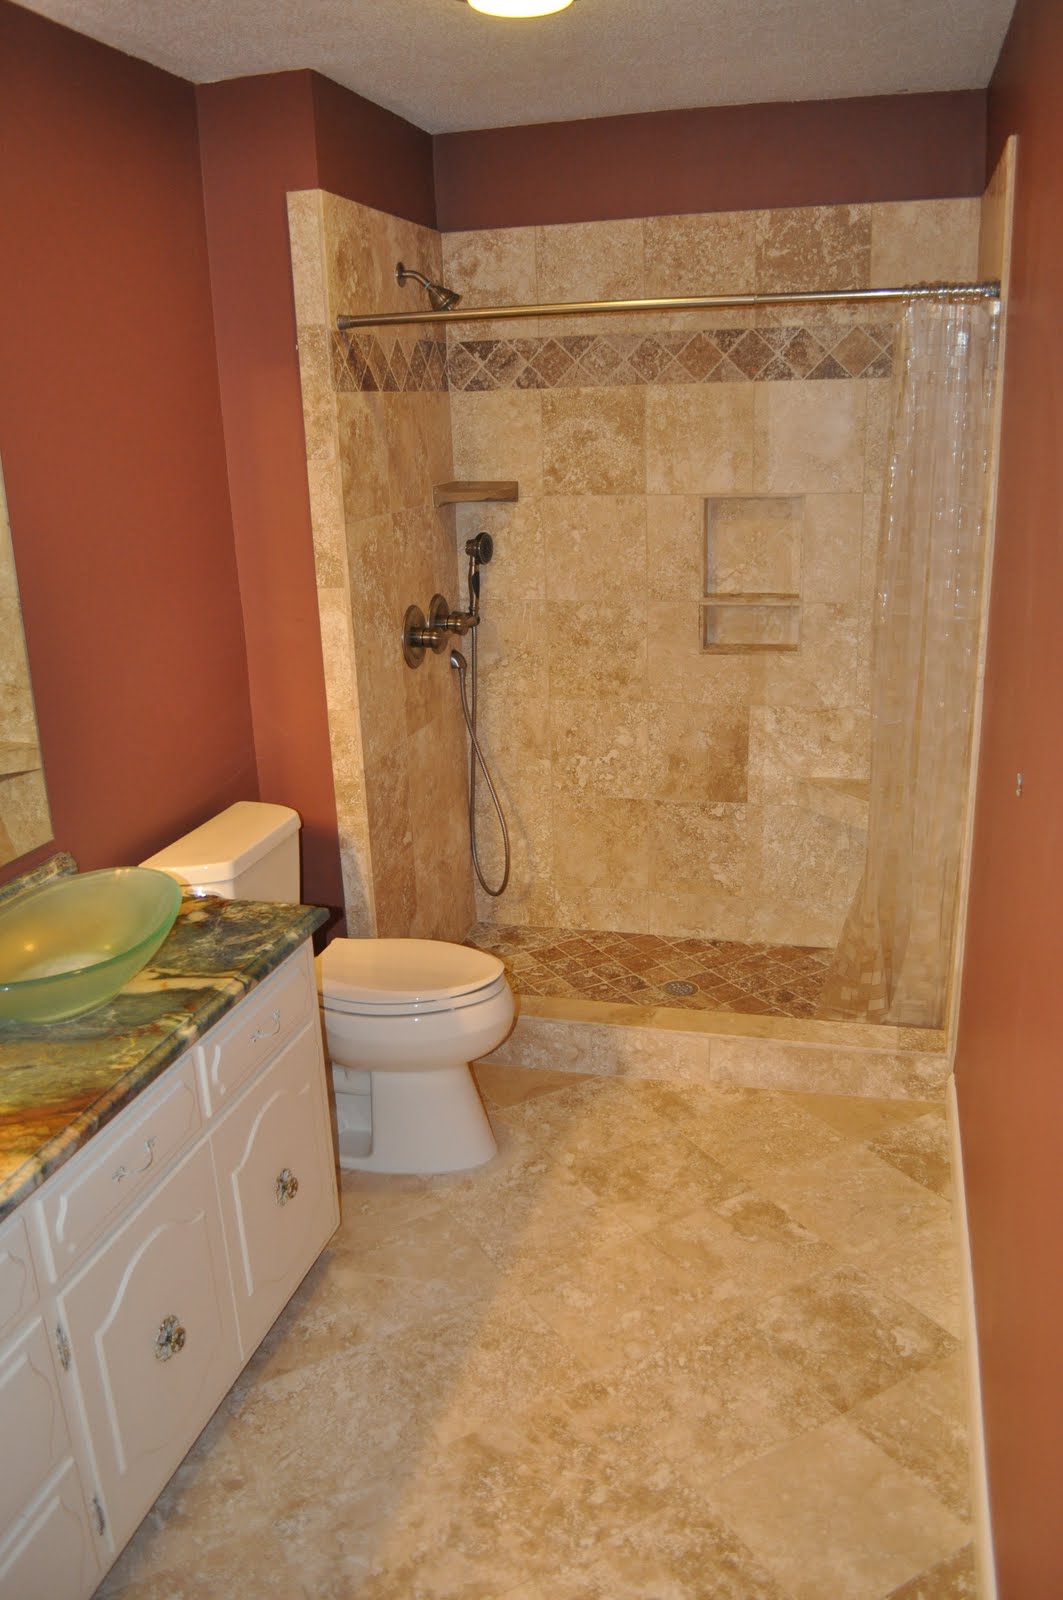 21 ideas to answer - is marble tile good for bathroom floor